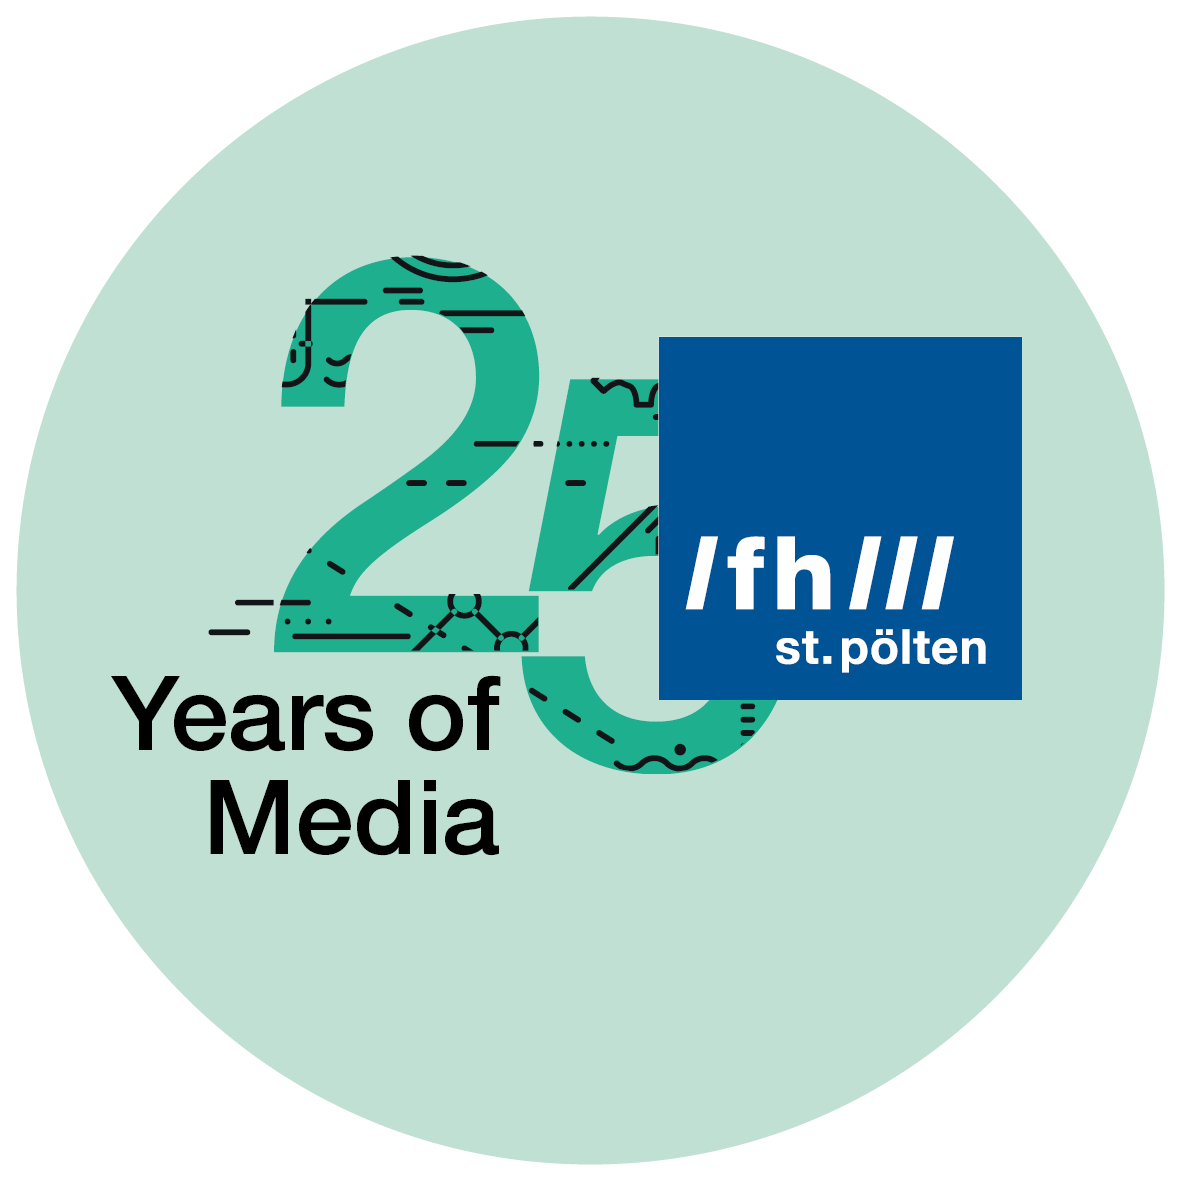 25 years of media at the St. Pölten UAS